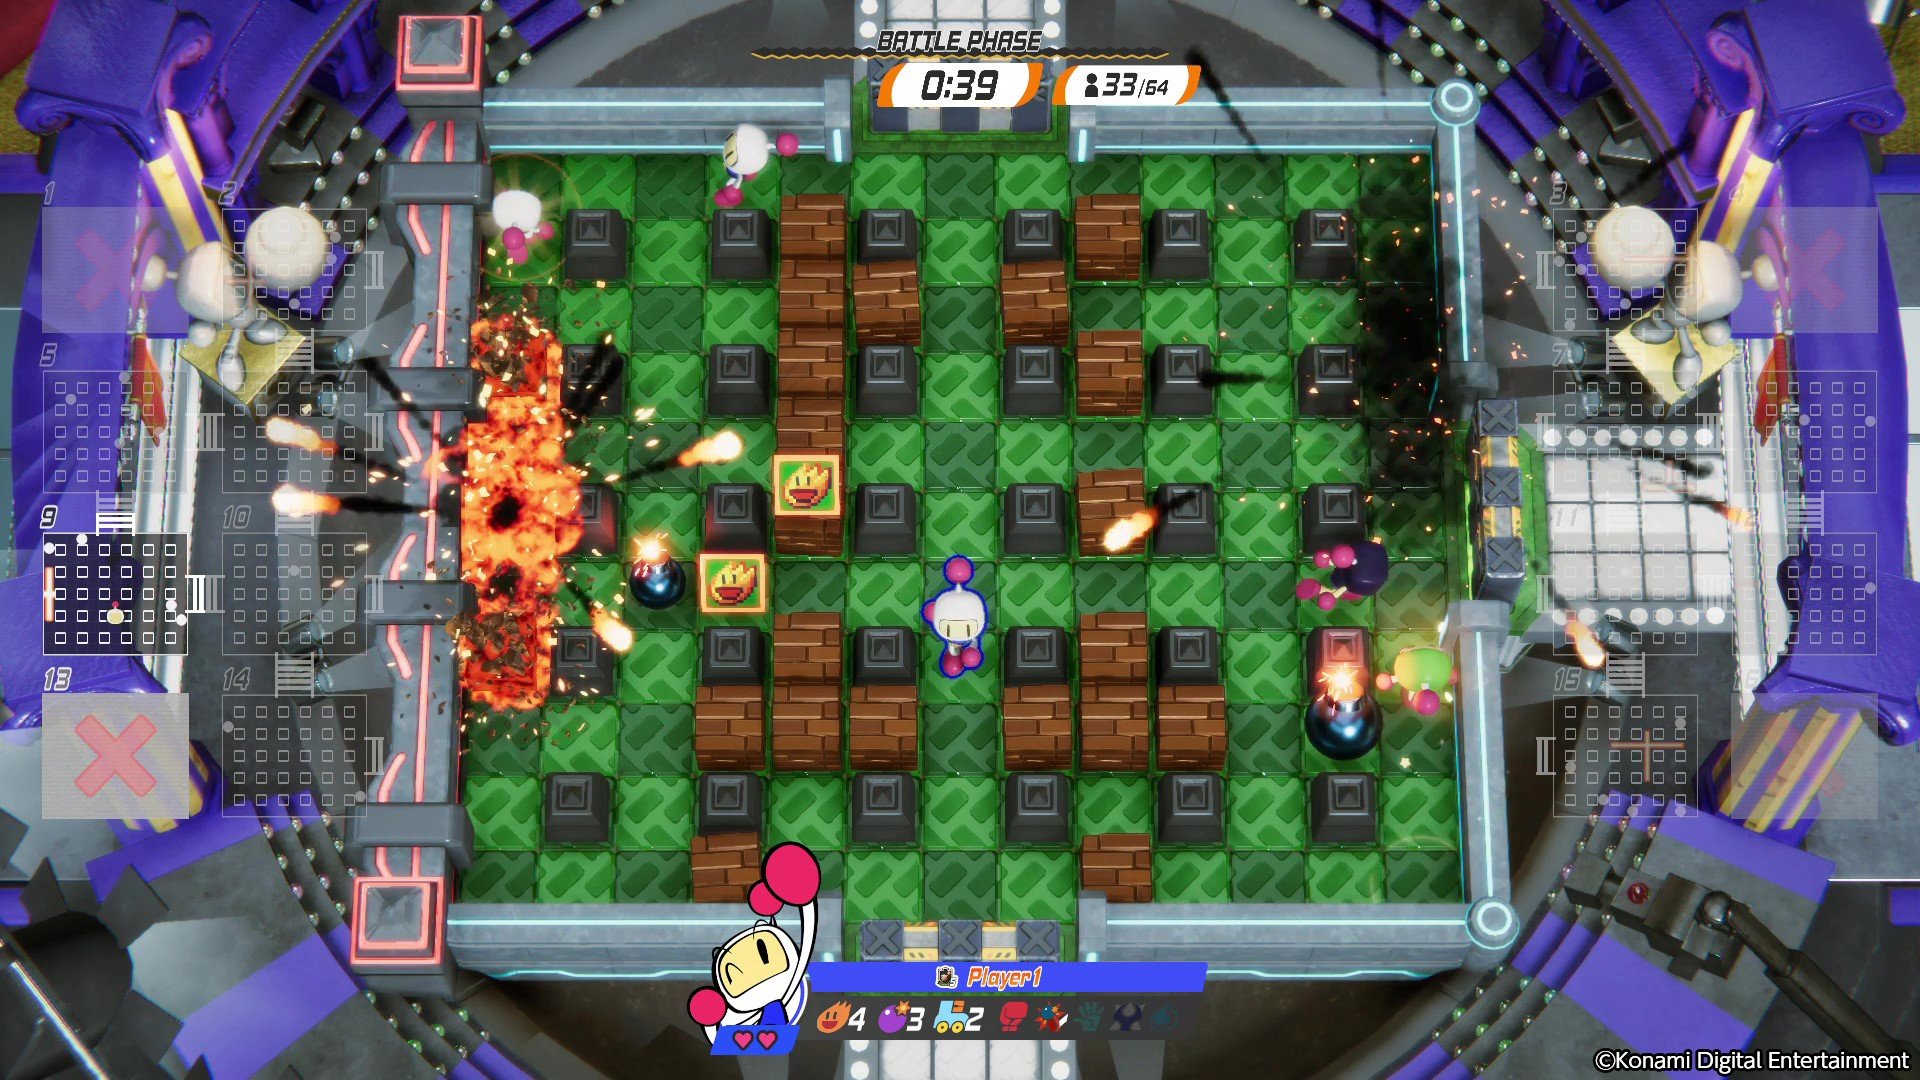 Konami Super Bomberman R Sony Ps4 Playstation 4 New